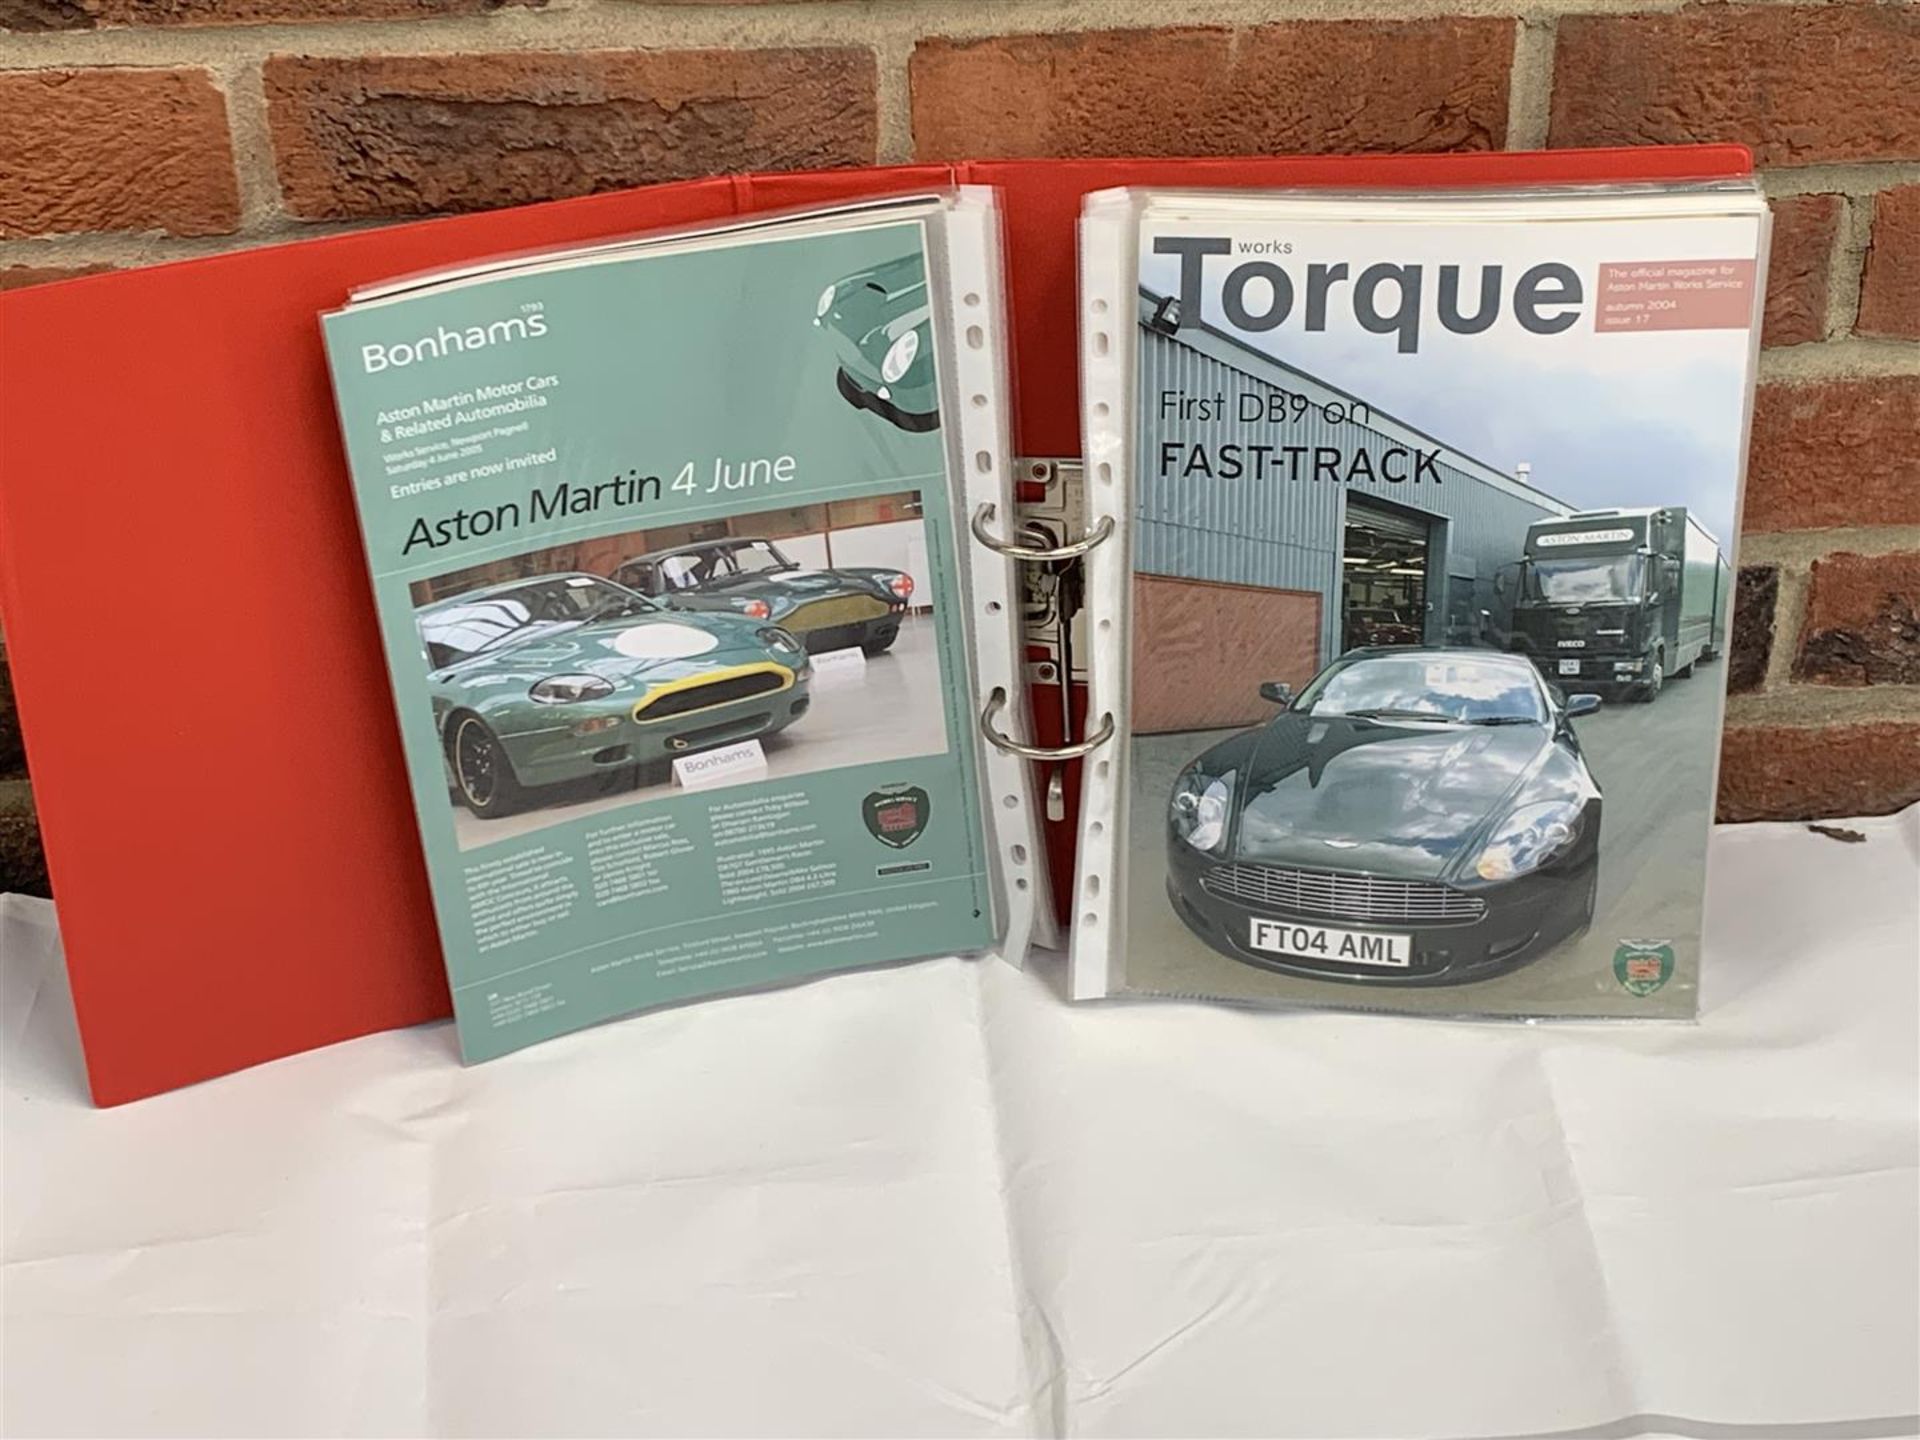 Mixed Lot Containing Aston Martin Magazines & Flag - Image 5 of 5